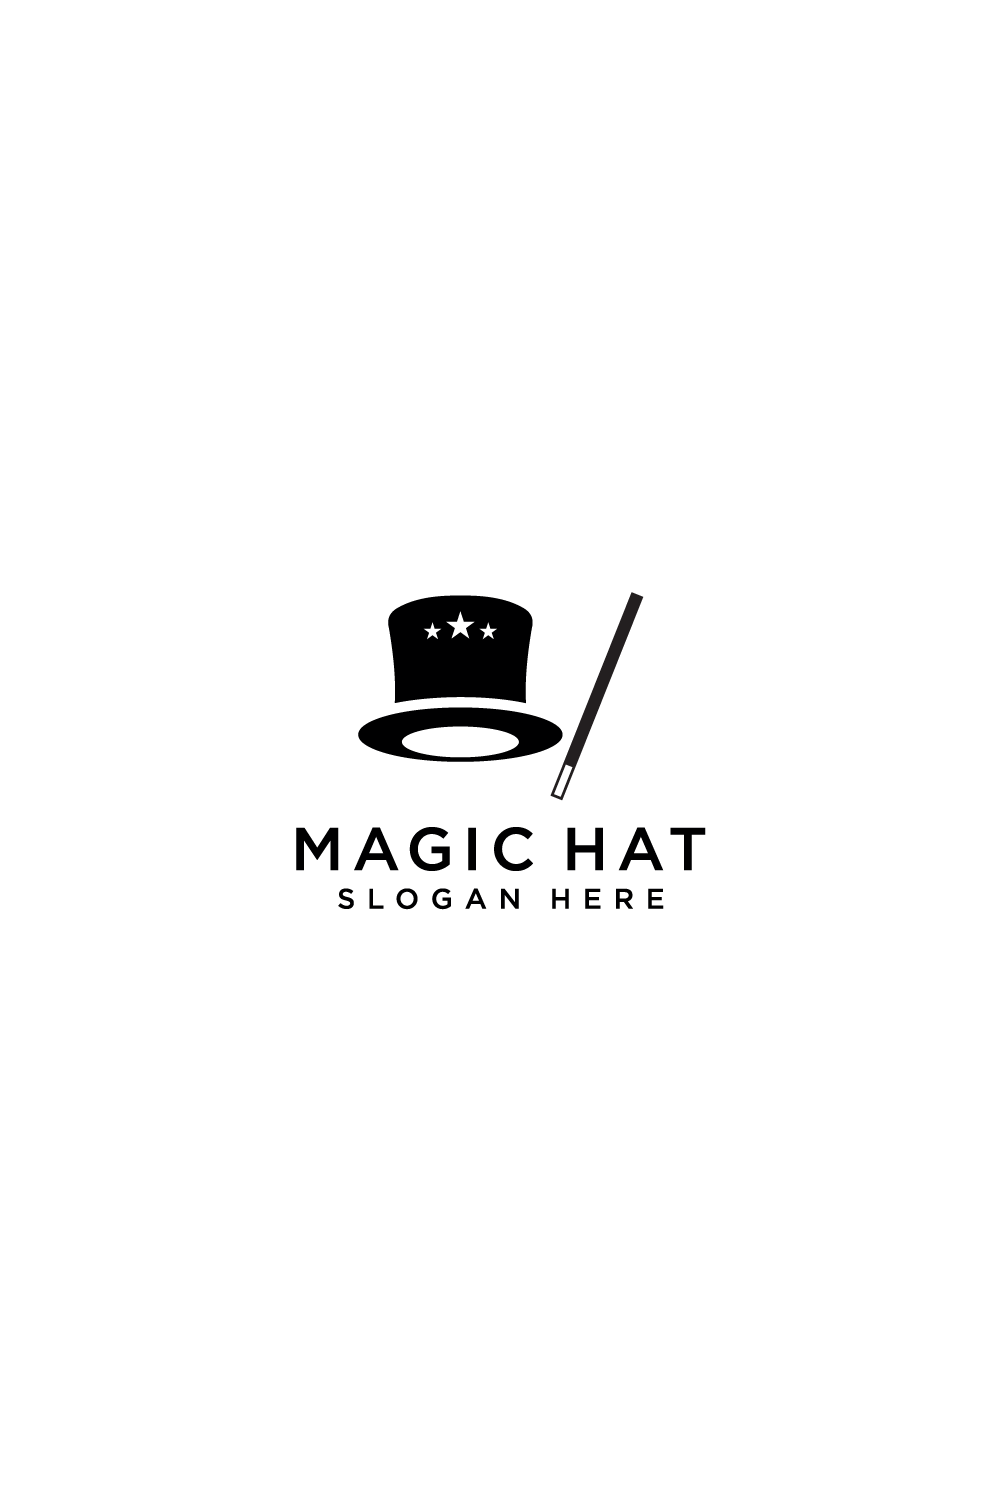 magic hat logo design template pinterest preview image.